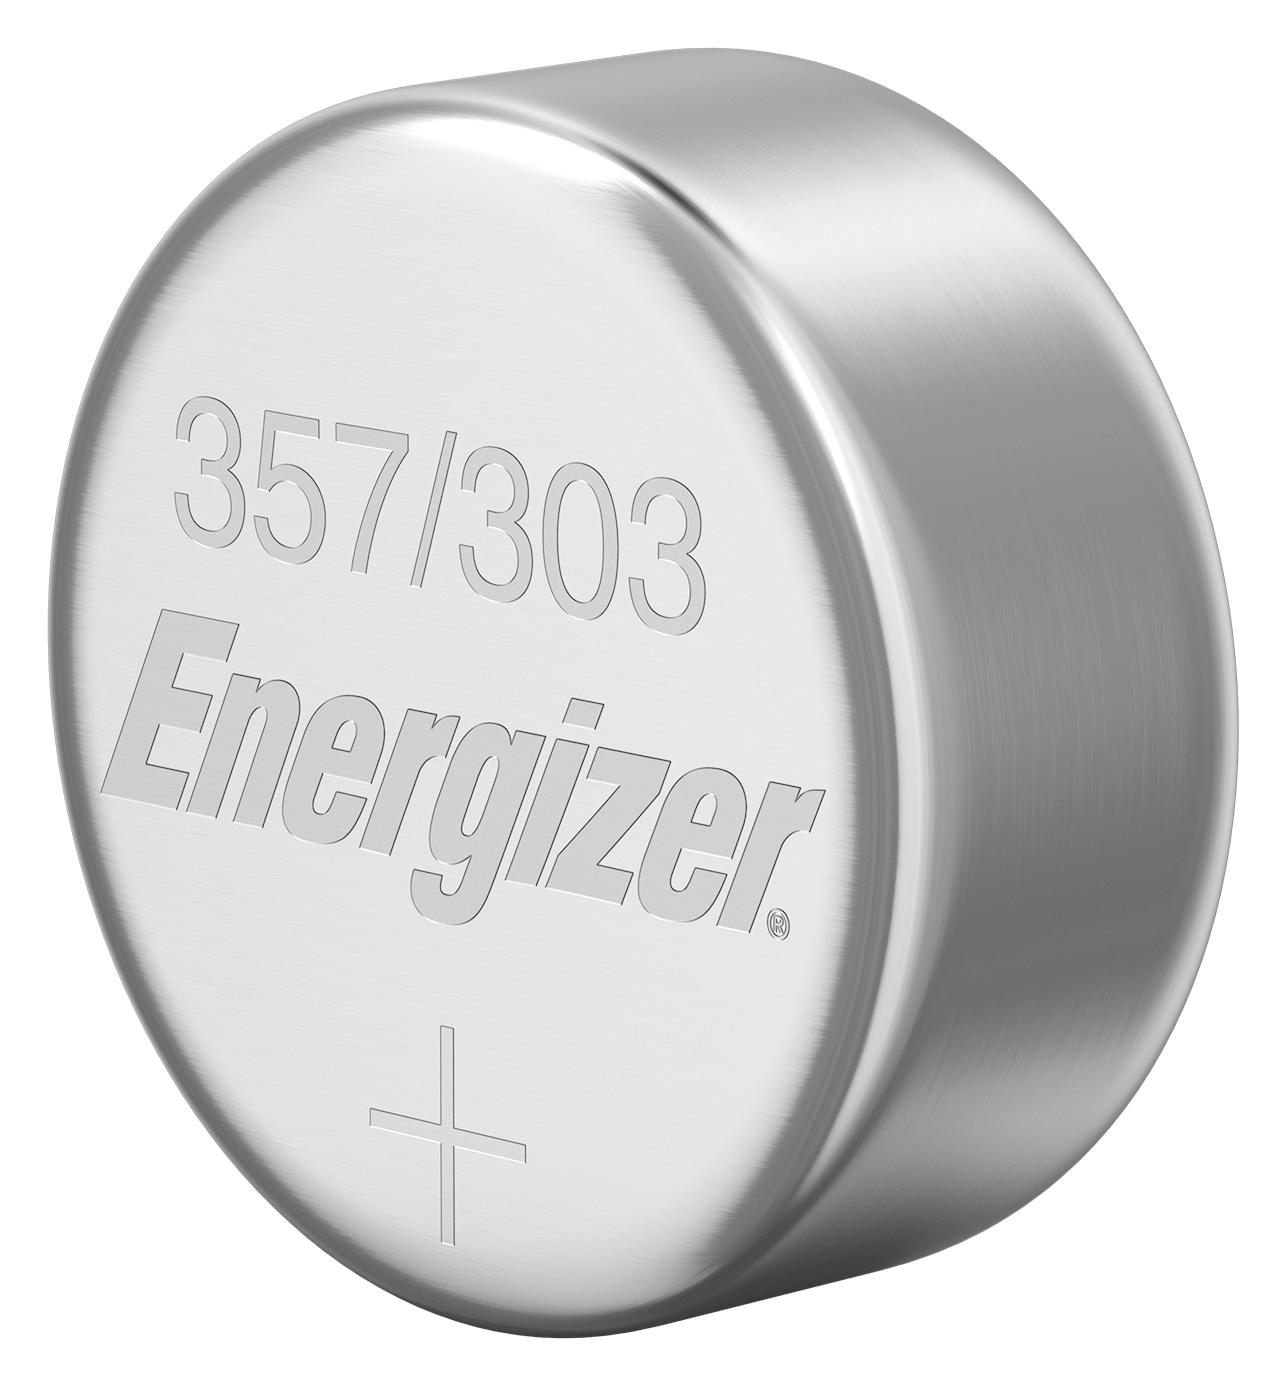 Energizer 7638900193114 Battery, Sr44, 1.55V, 138Mah